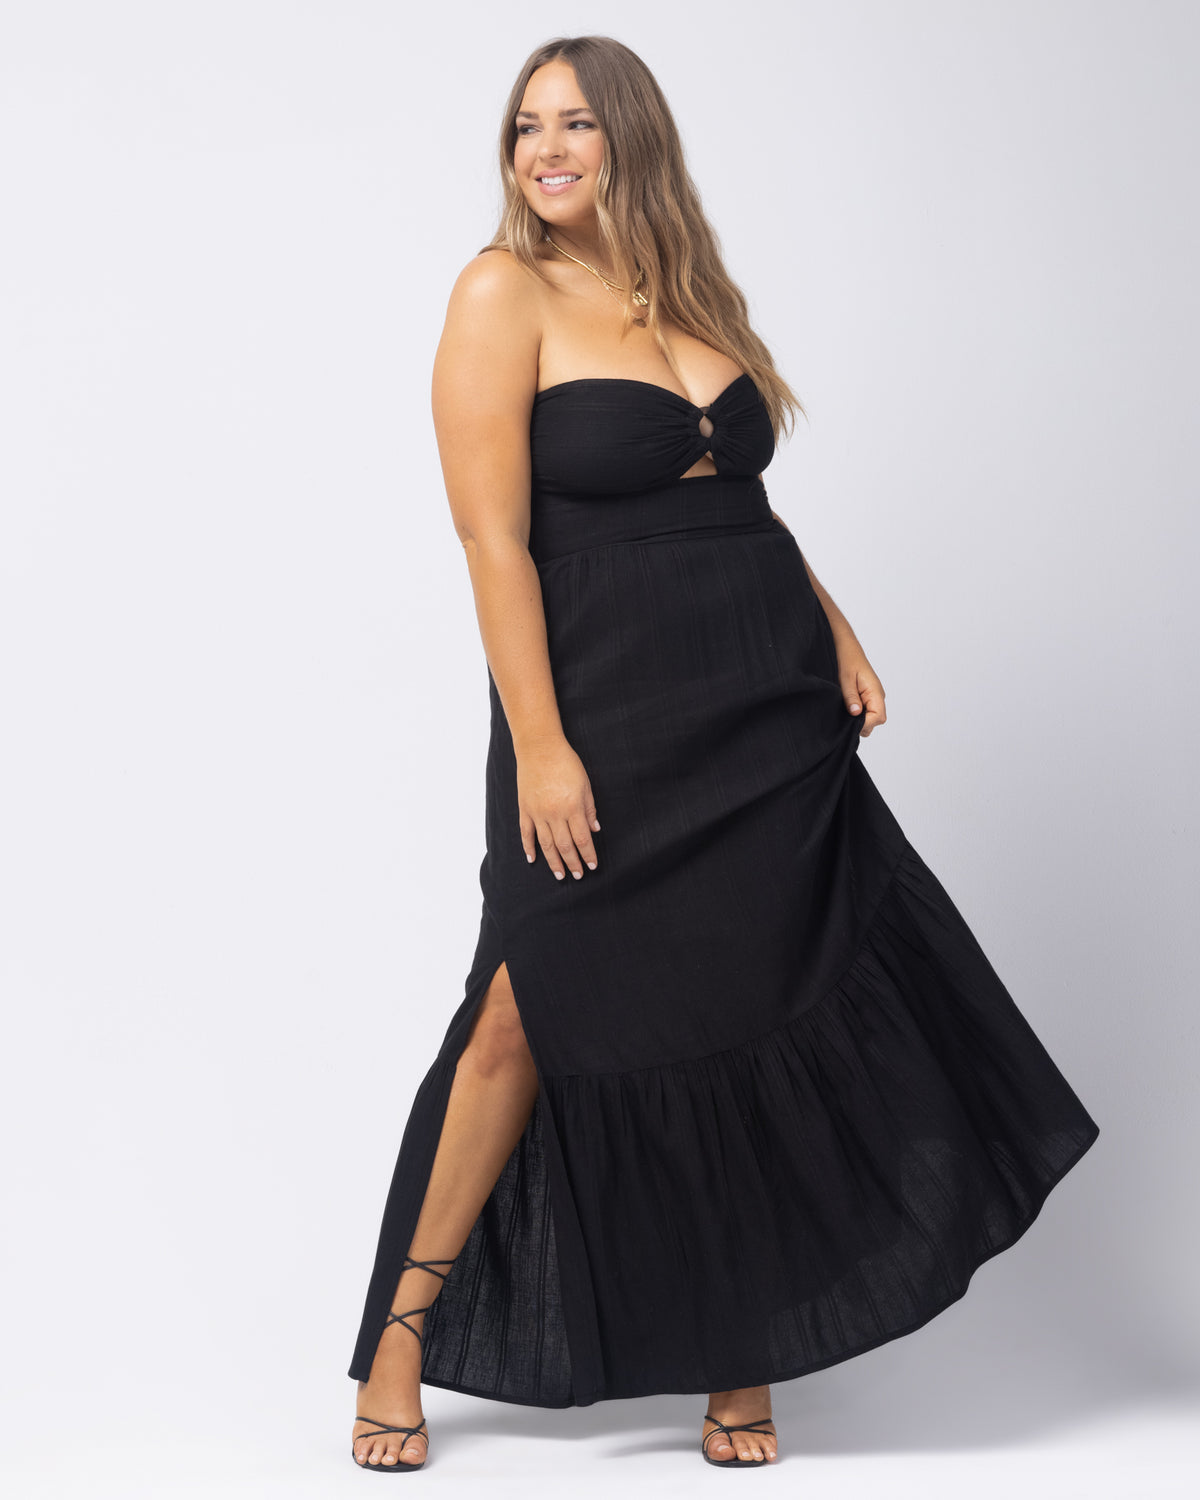 Melody Dress - Black Black | Model: Ali (size: XL) | Hover